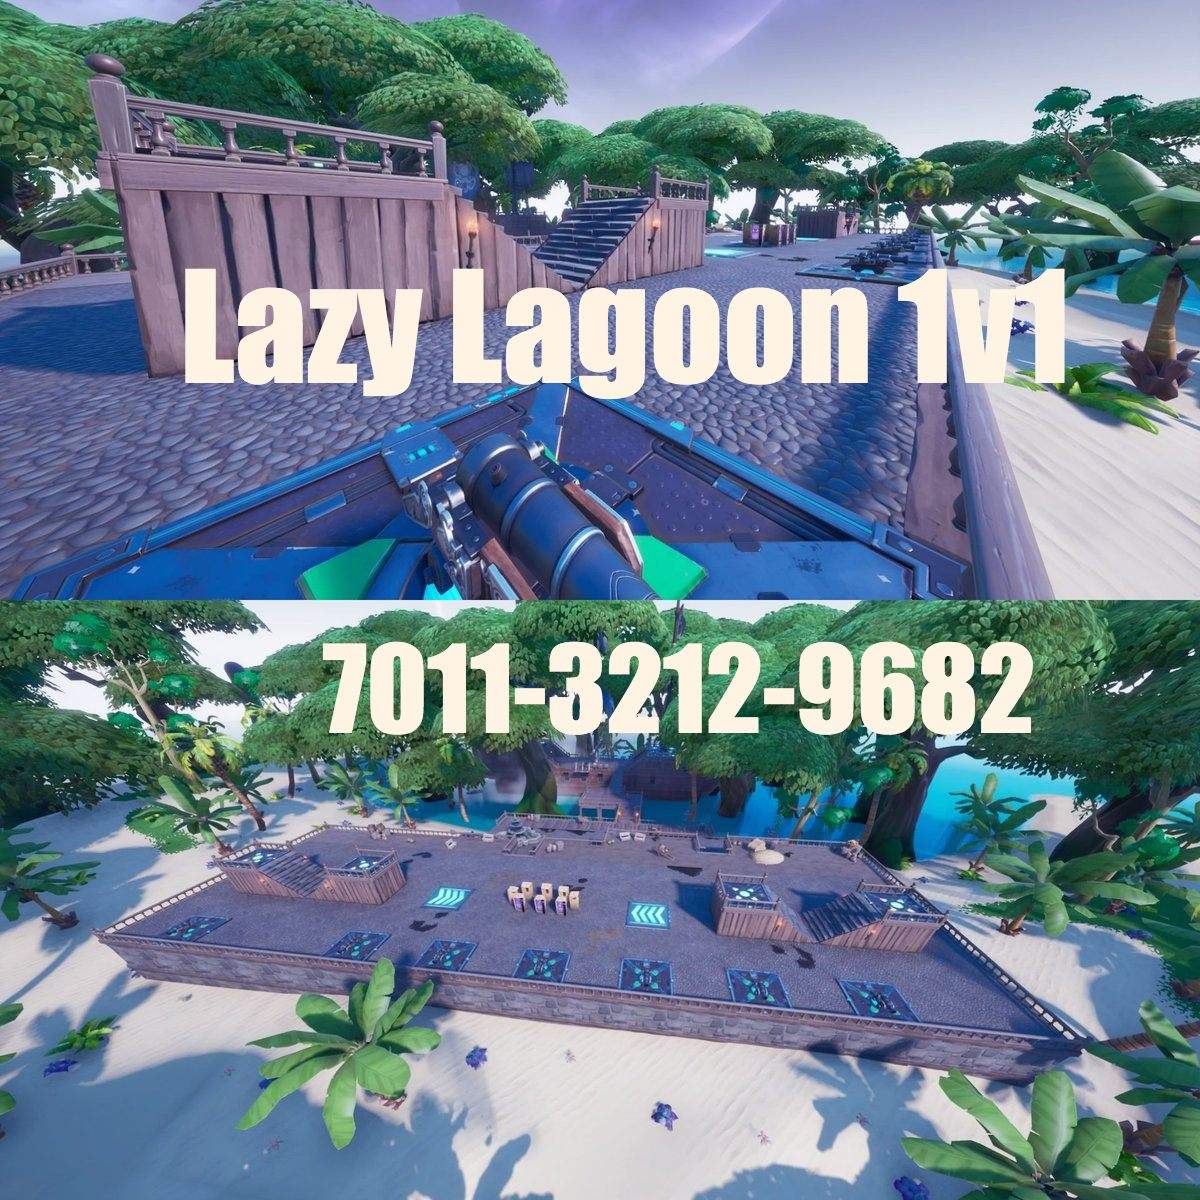 Lazy Lagoon Fortnite Creative Code Lazy Lagoon 1v1 Fortnite Creative Map Code Dropnite